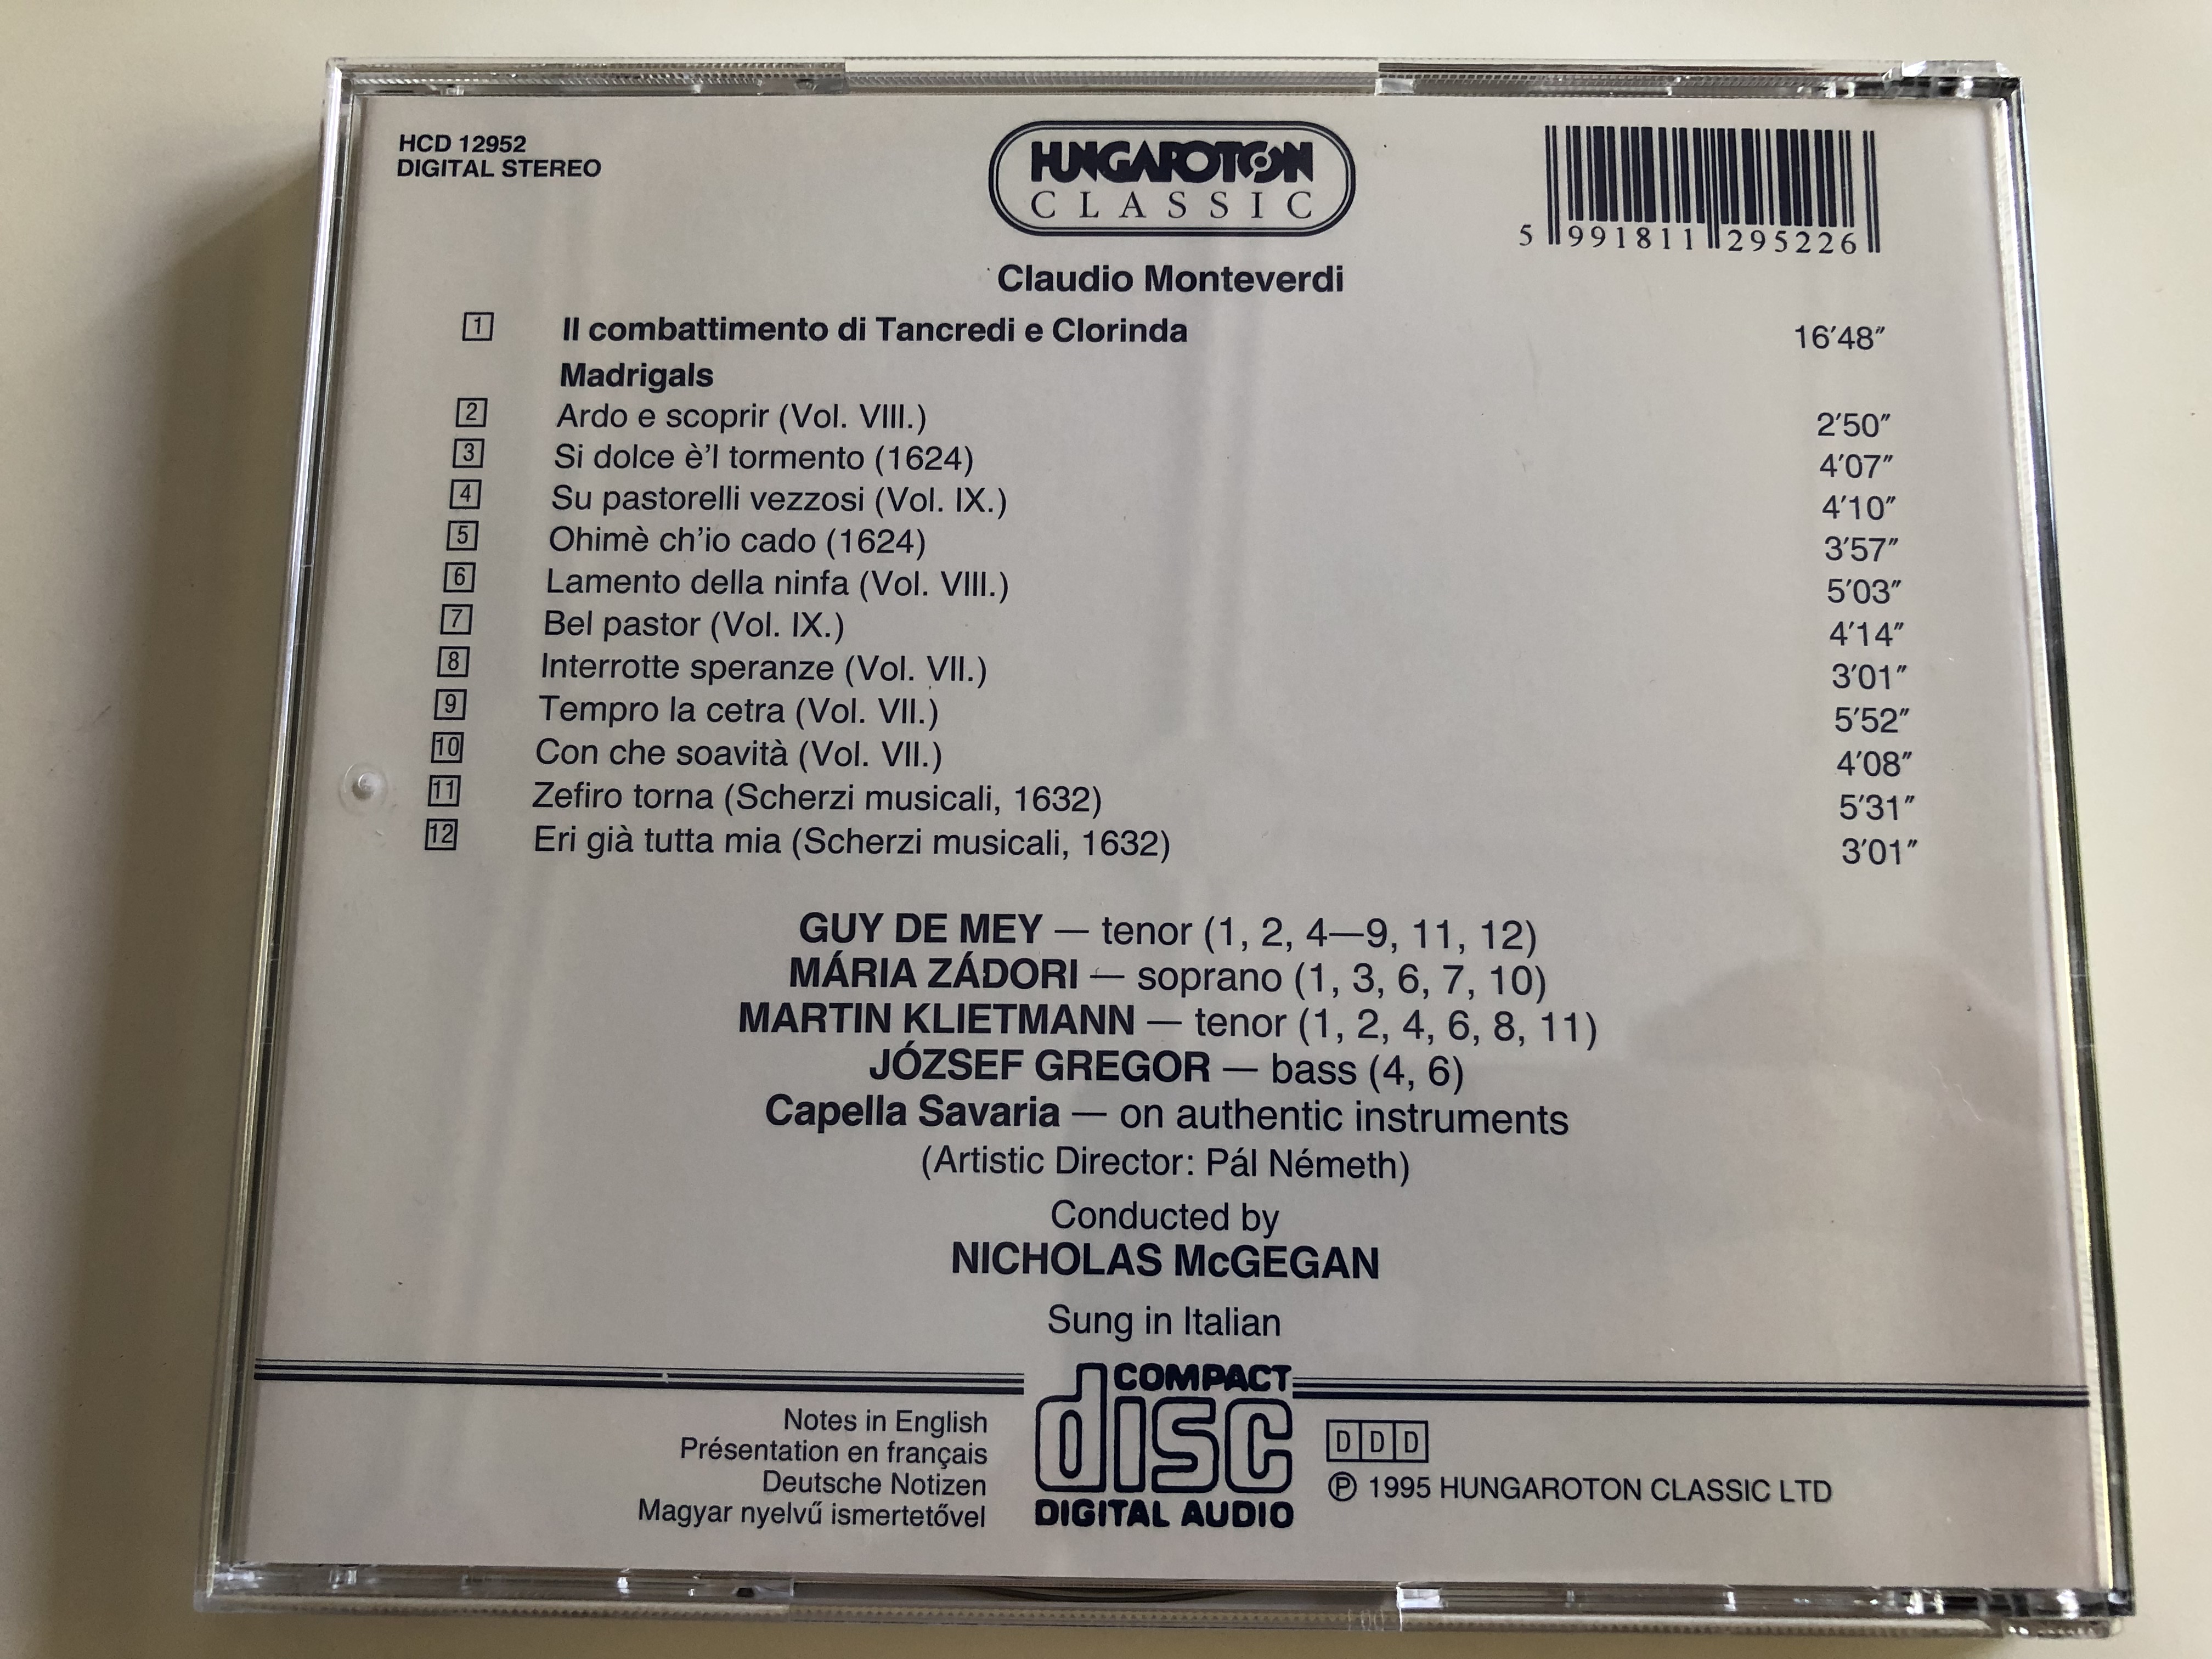 monteverdi-il-comattimento-di-tancredi-e-clorinda-madrigals-guy-de-mey-m-ria-z-dori-martin-klietmann-j-zsef-gregor-capella-savaria-nicholas-mcgegan-hungaroton-classic-audio-cd-1995-10-.jpg